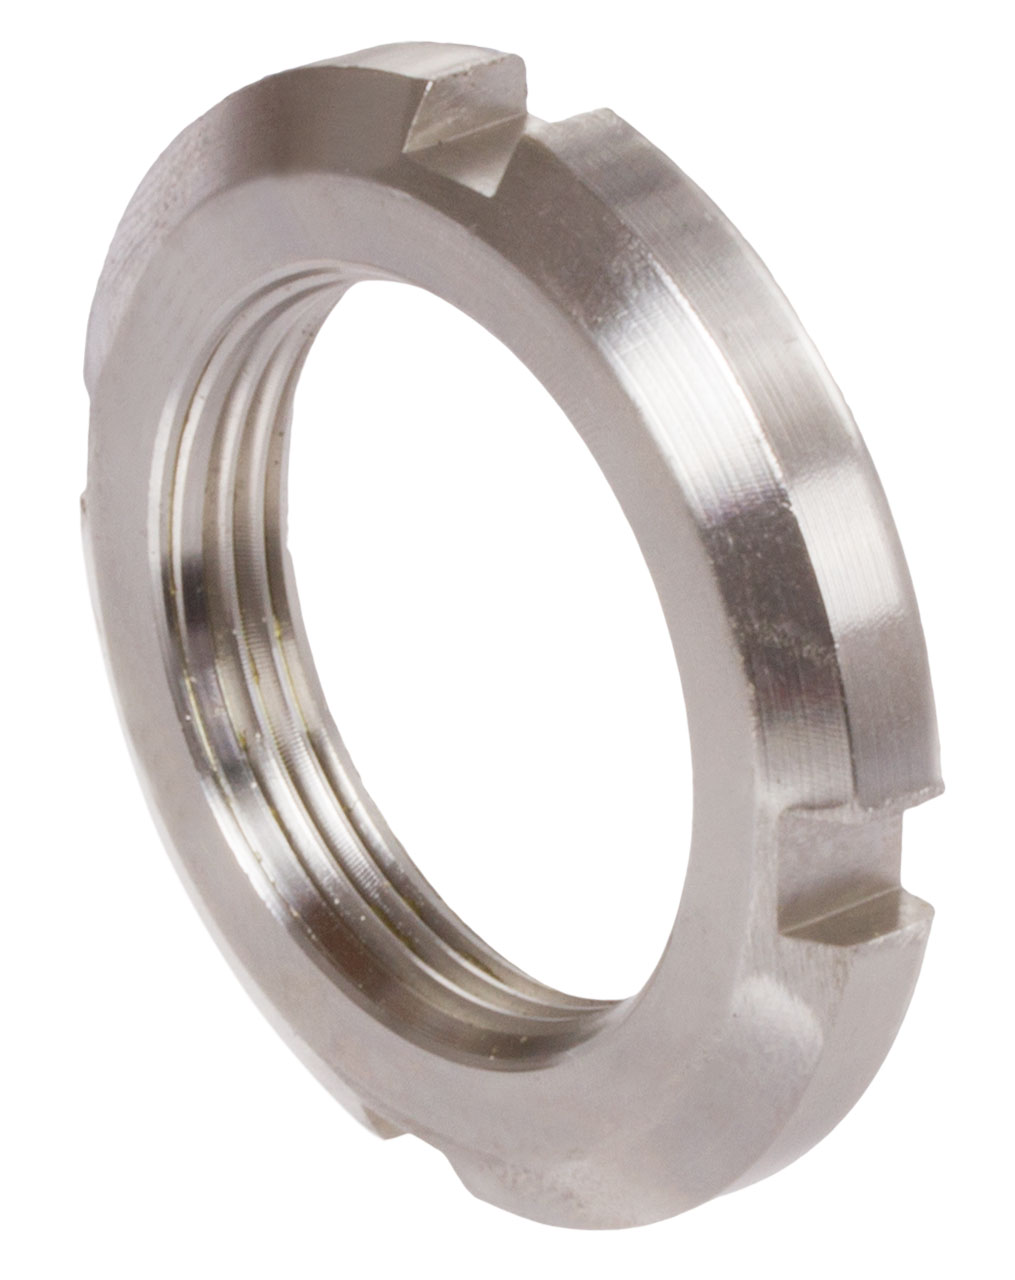 Locknuts for rolling bearings DIN 981